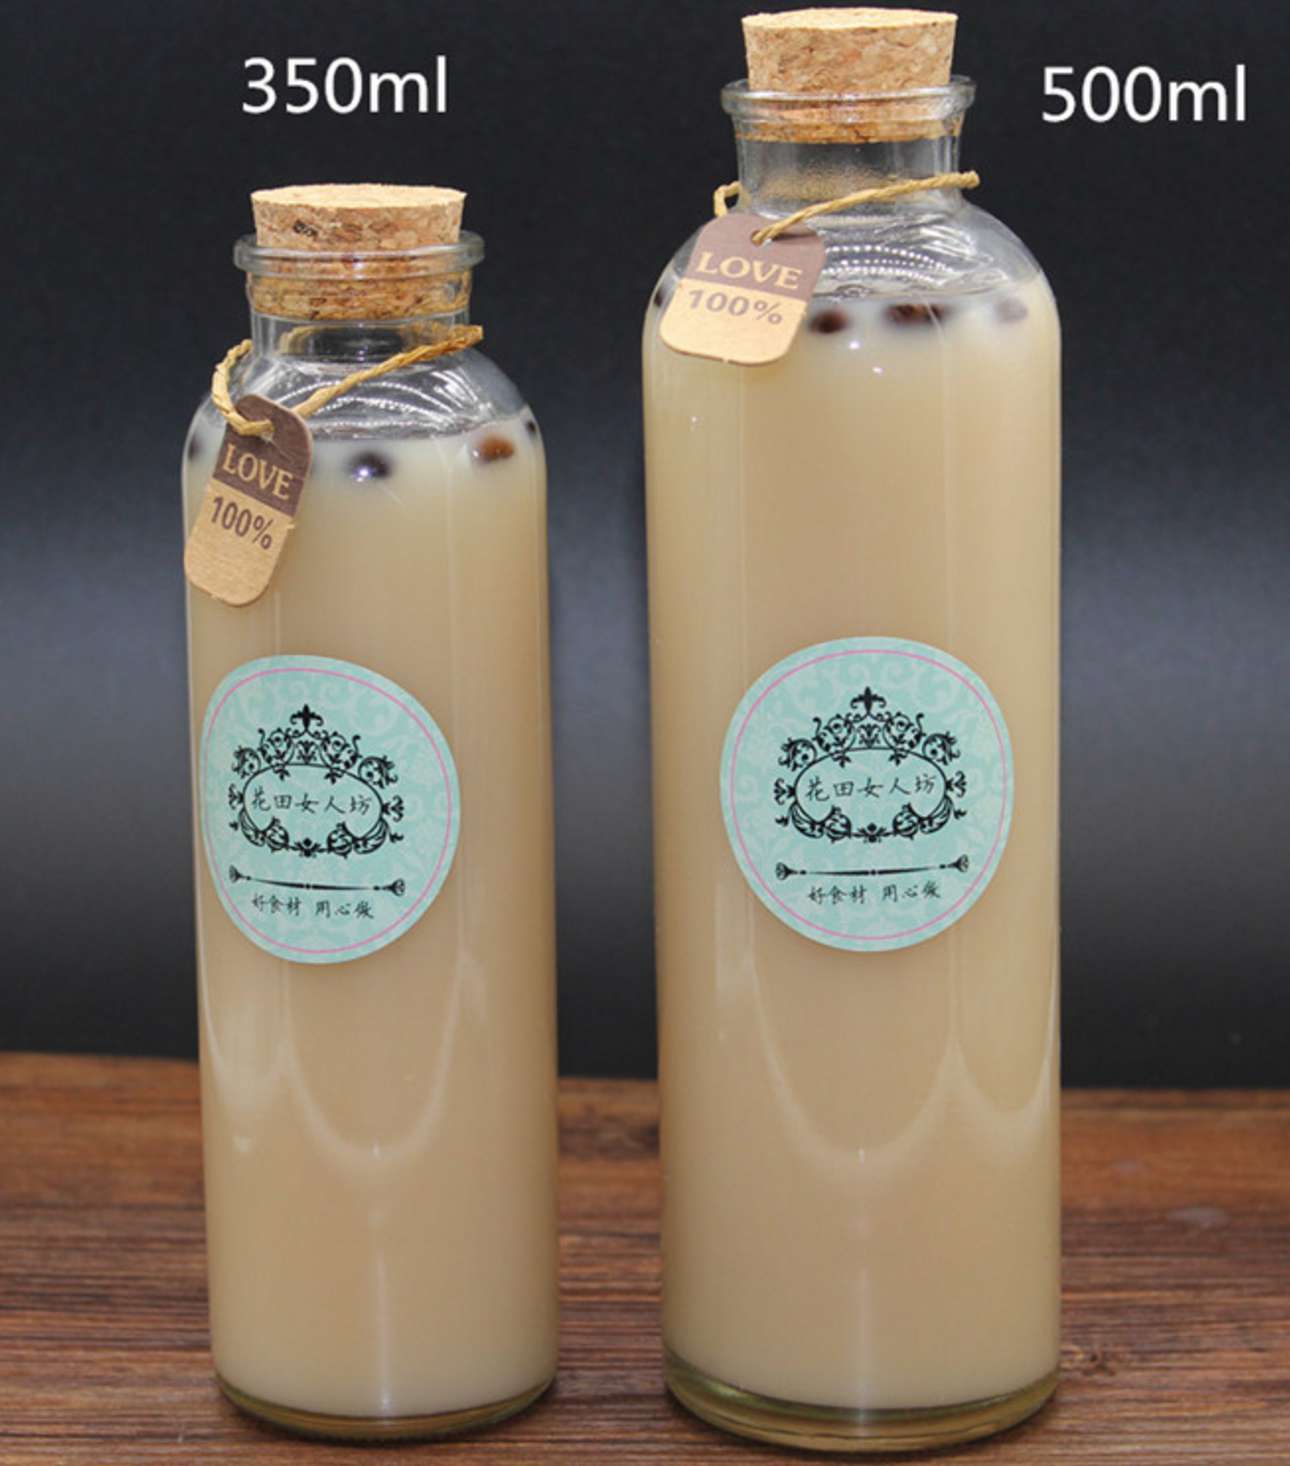 10oz 16oz 500ml juice glass bottle with cork